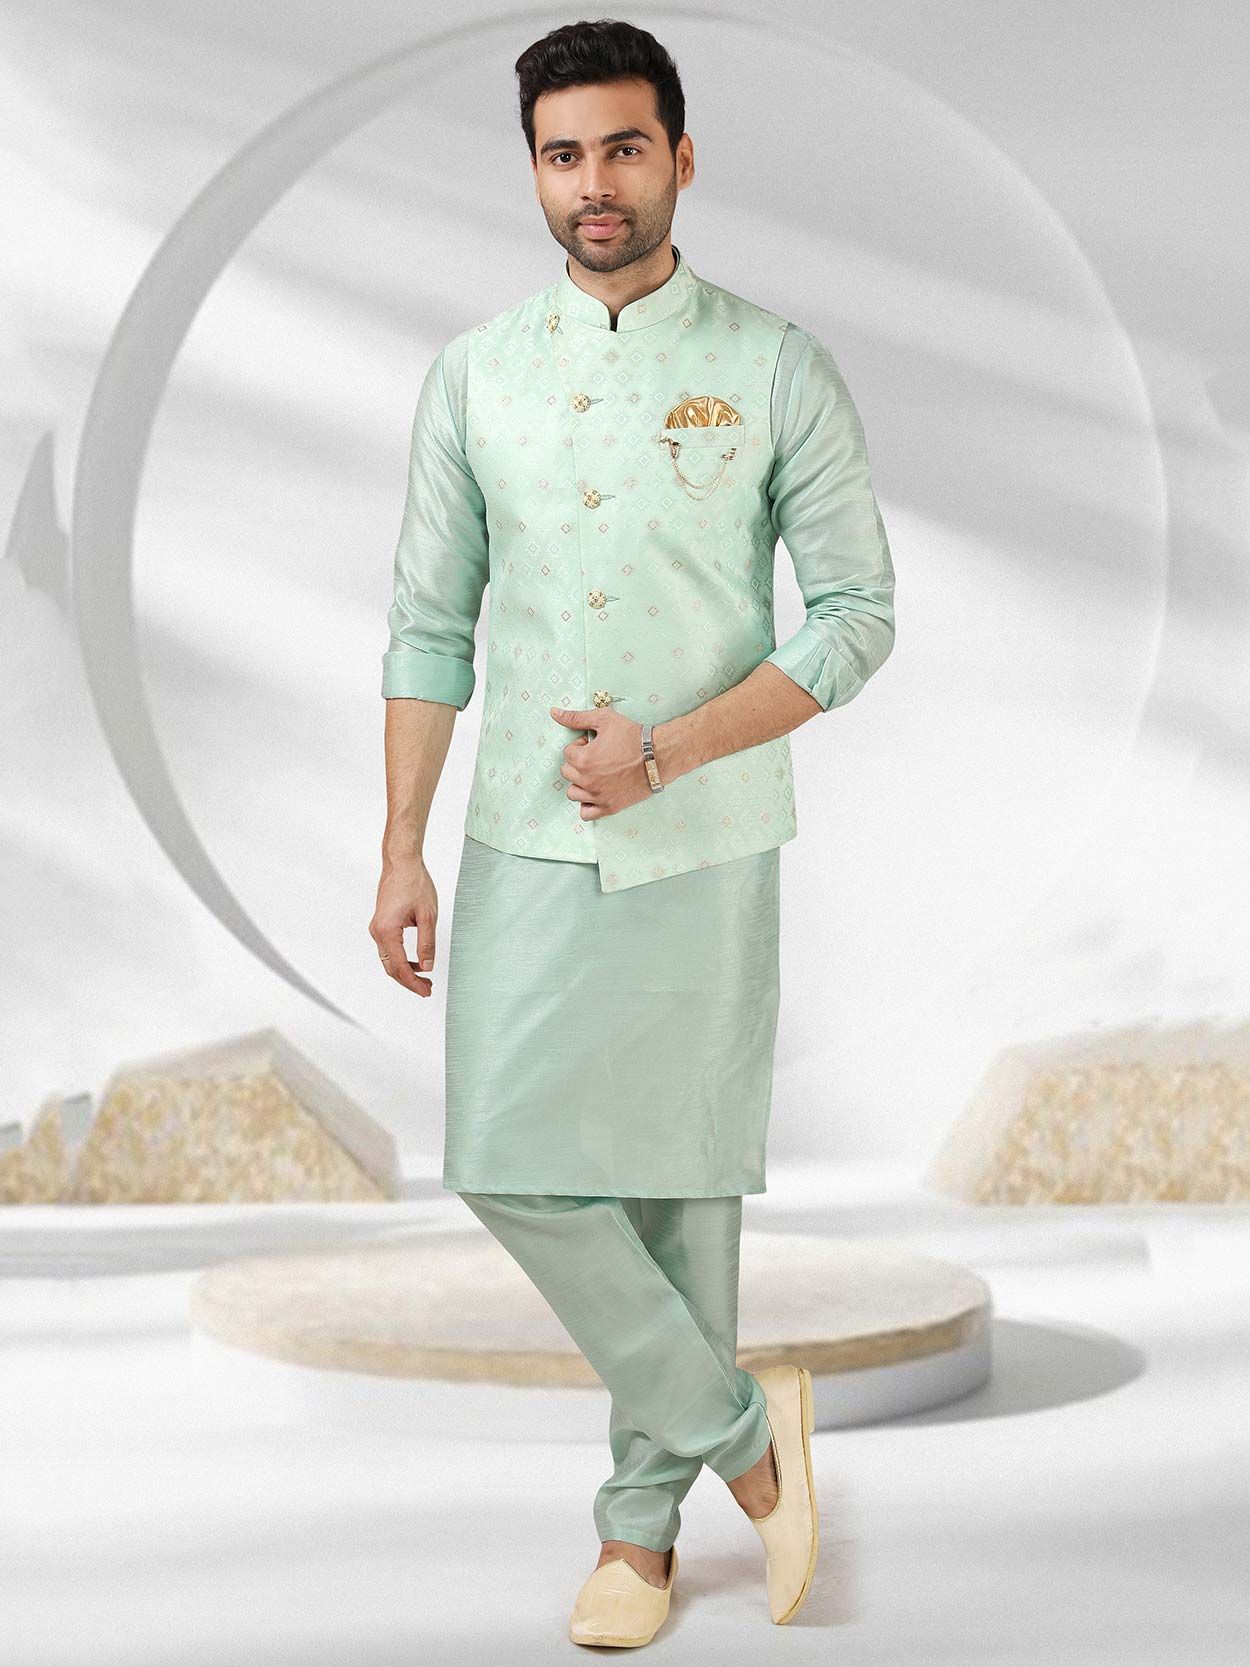 Buy Sadree Men's Silk Green Kurta Golden Pajama Green Jacket set  (Birthday,Wedding, Ceremony, Casual, Engagement) |Jacket & Kurta Pyjama Set  (36) at Amazon.in